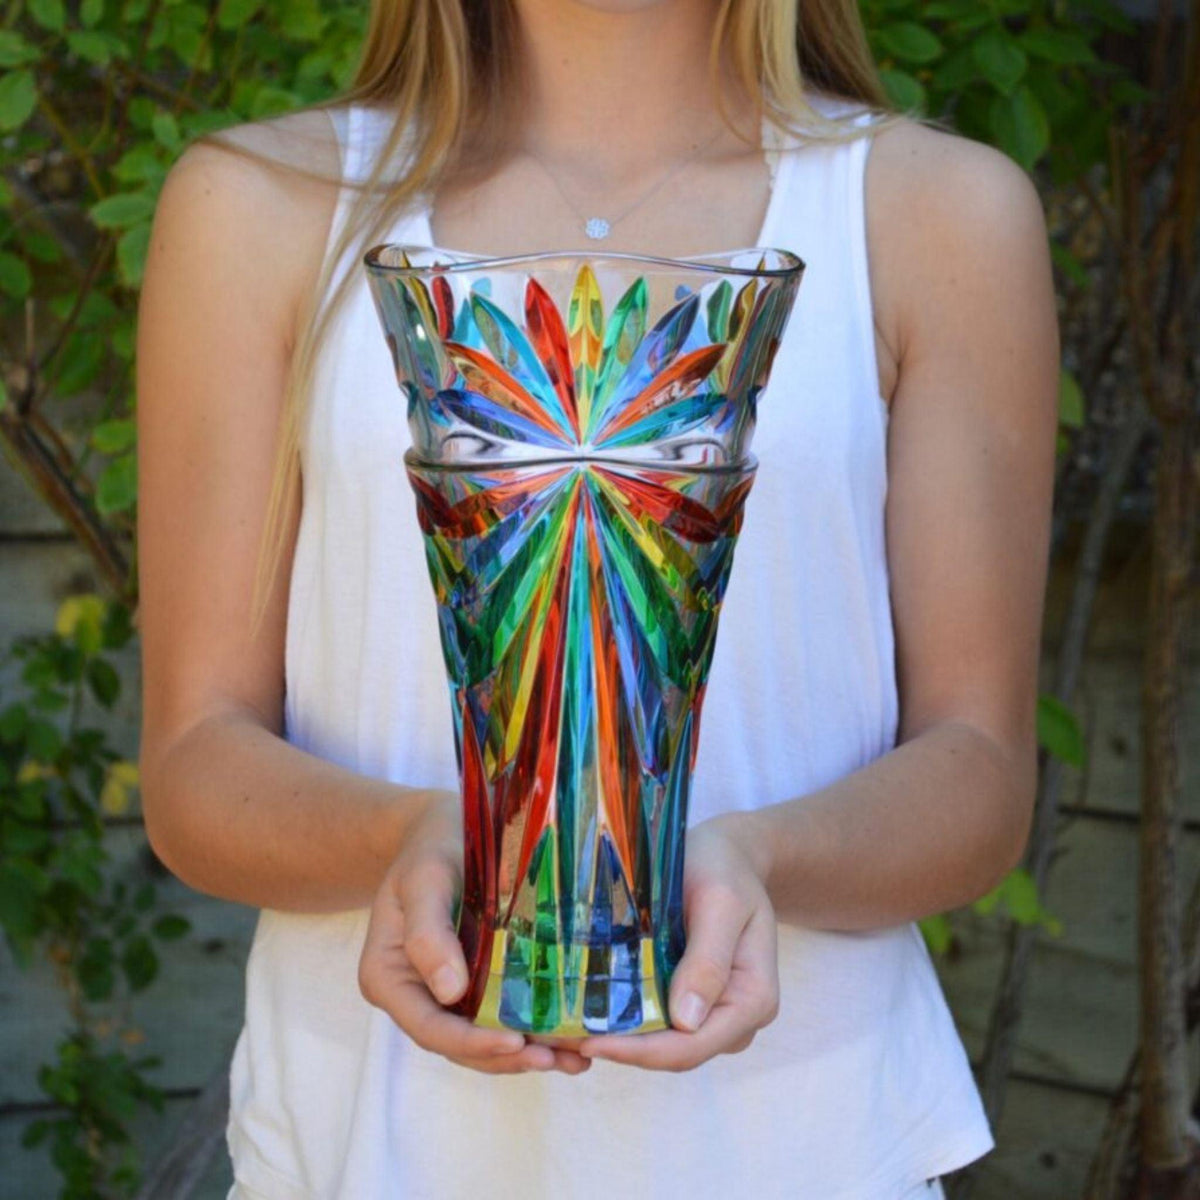 Starburst Luxury Vase, Hand Painted Crystal, Made in Italy at MyItalianDecor